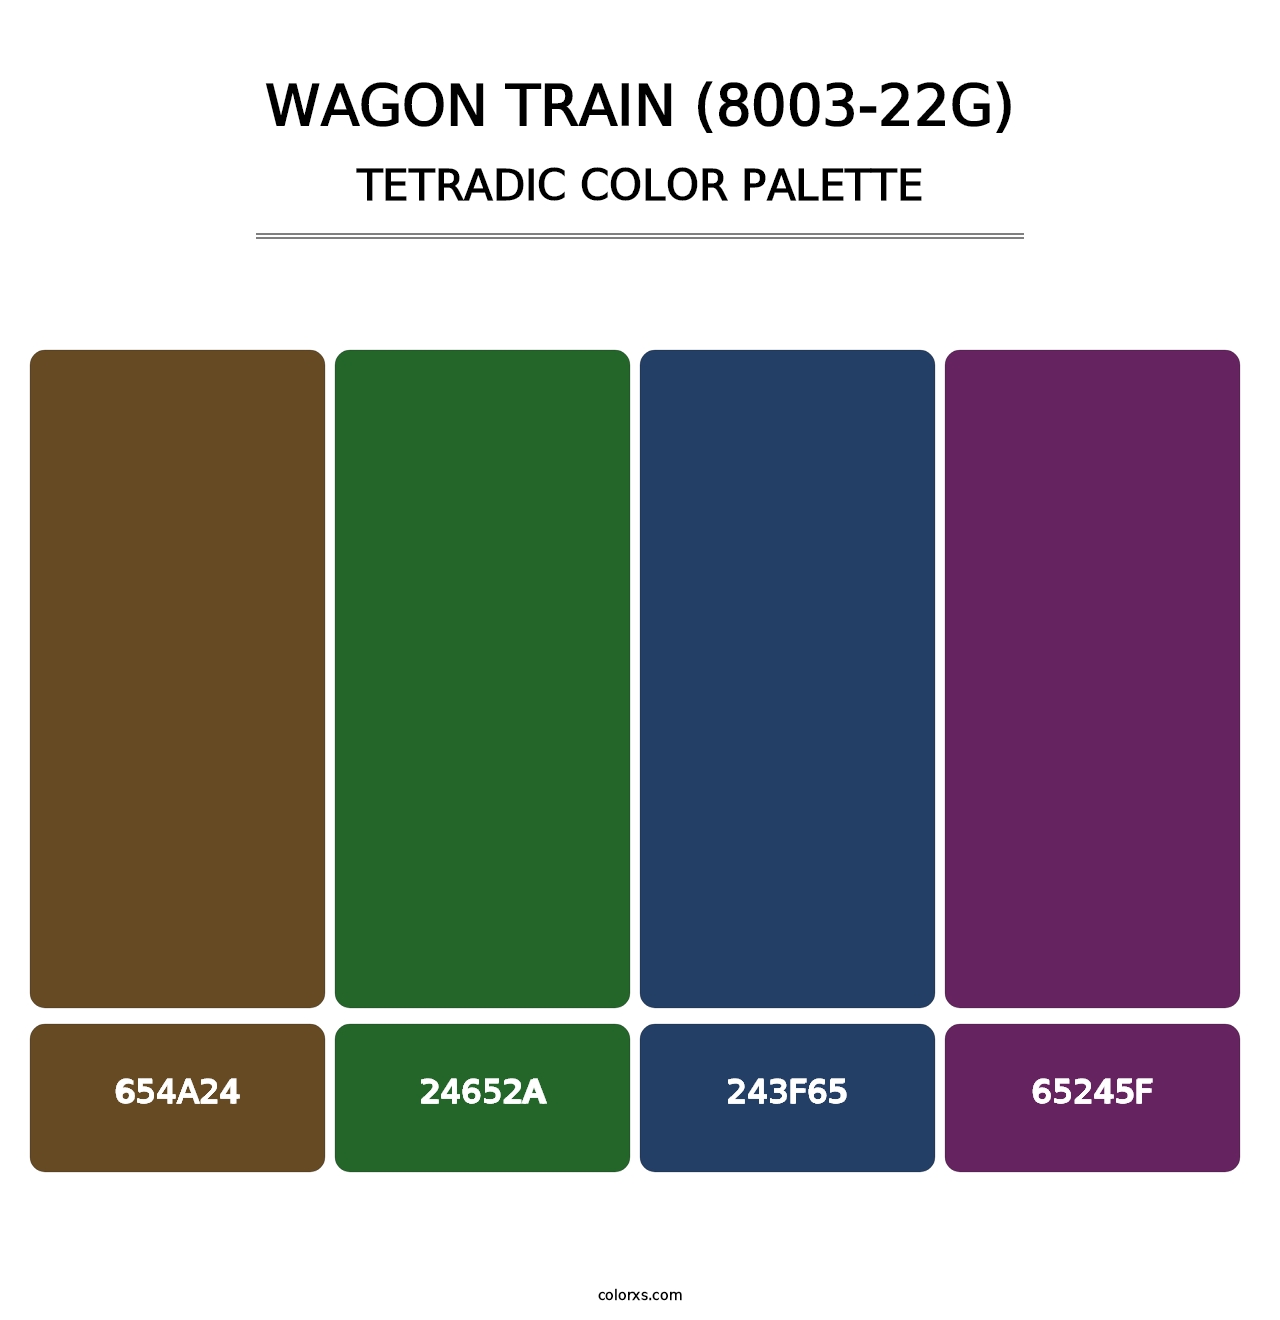 Wagon Train (8003-22G) - Tetradic Color Palette